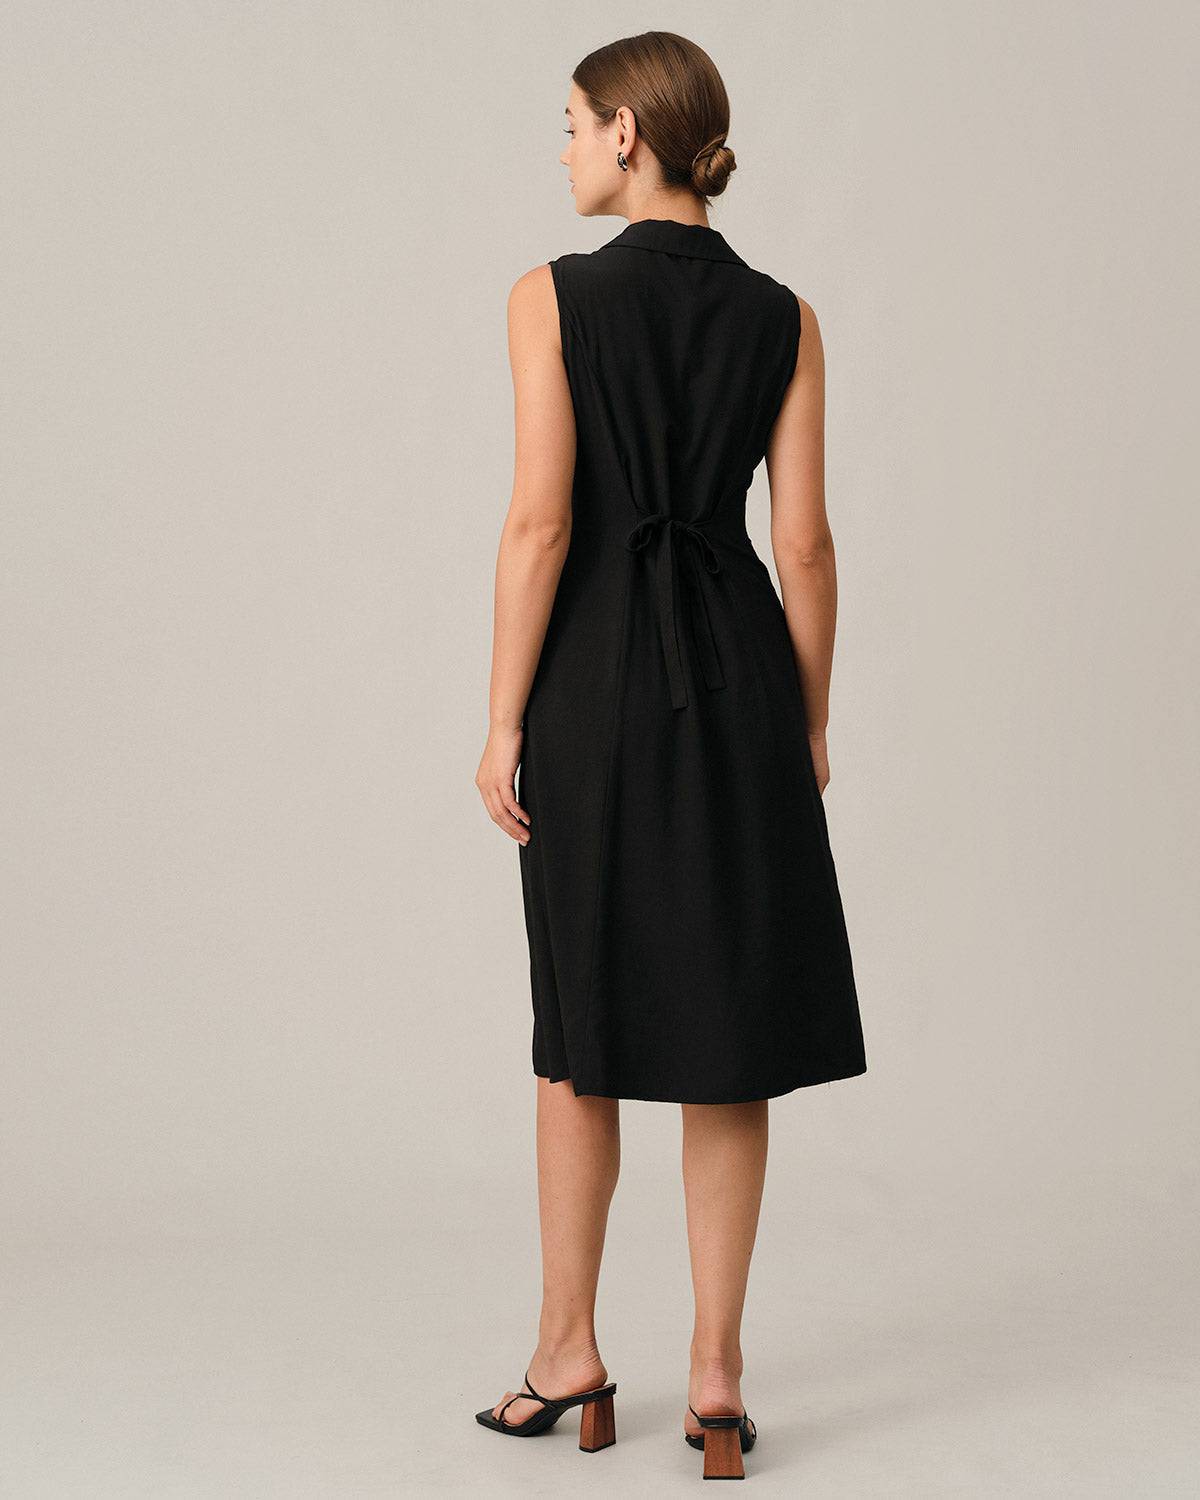 - The Black V Dresses Solid Dress Tunic - Neck Midi V-Neck Dress | Black RIHOAS Sleeveless Midi - Black